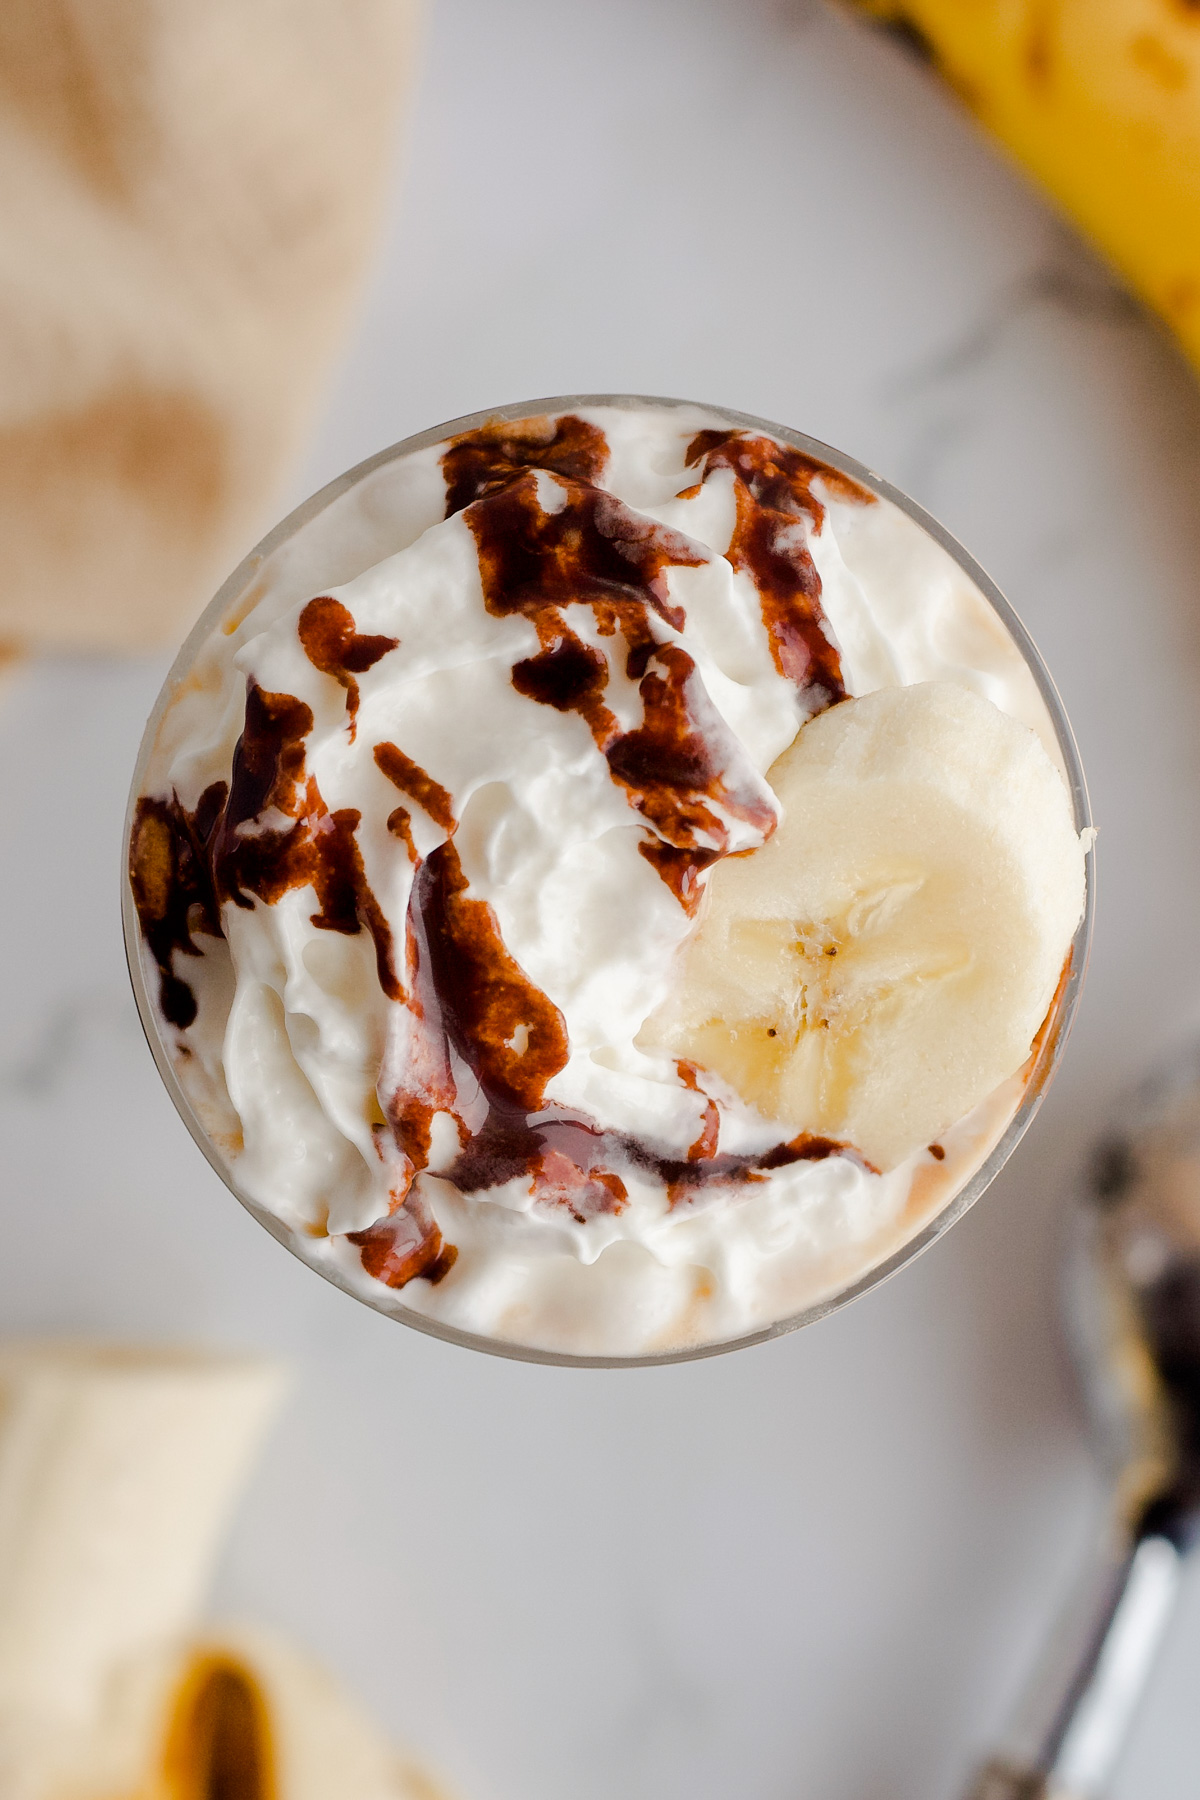 Overhead view of milkshake with whipped cream, chocolate syrup and banana slice